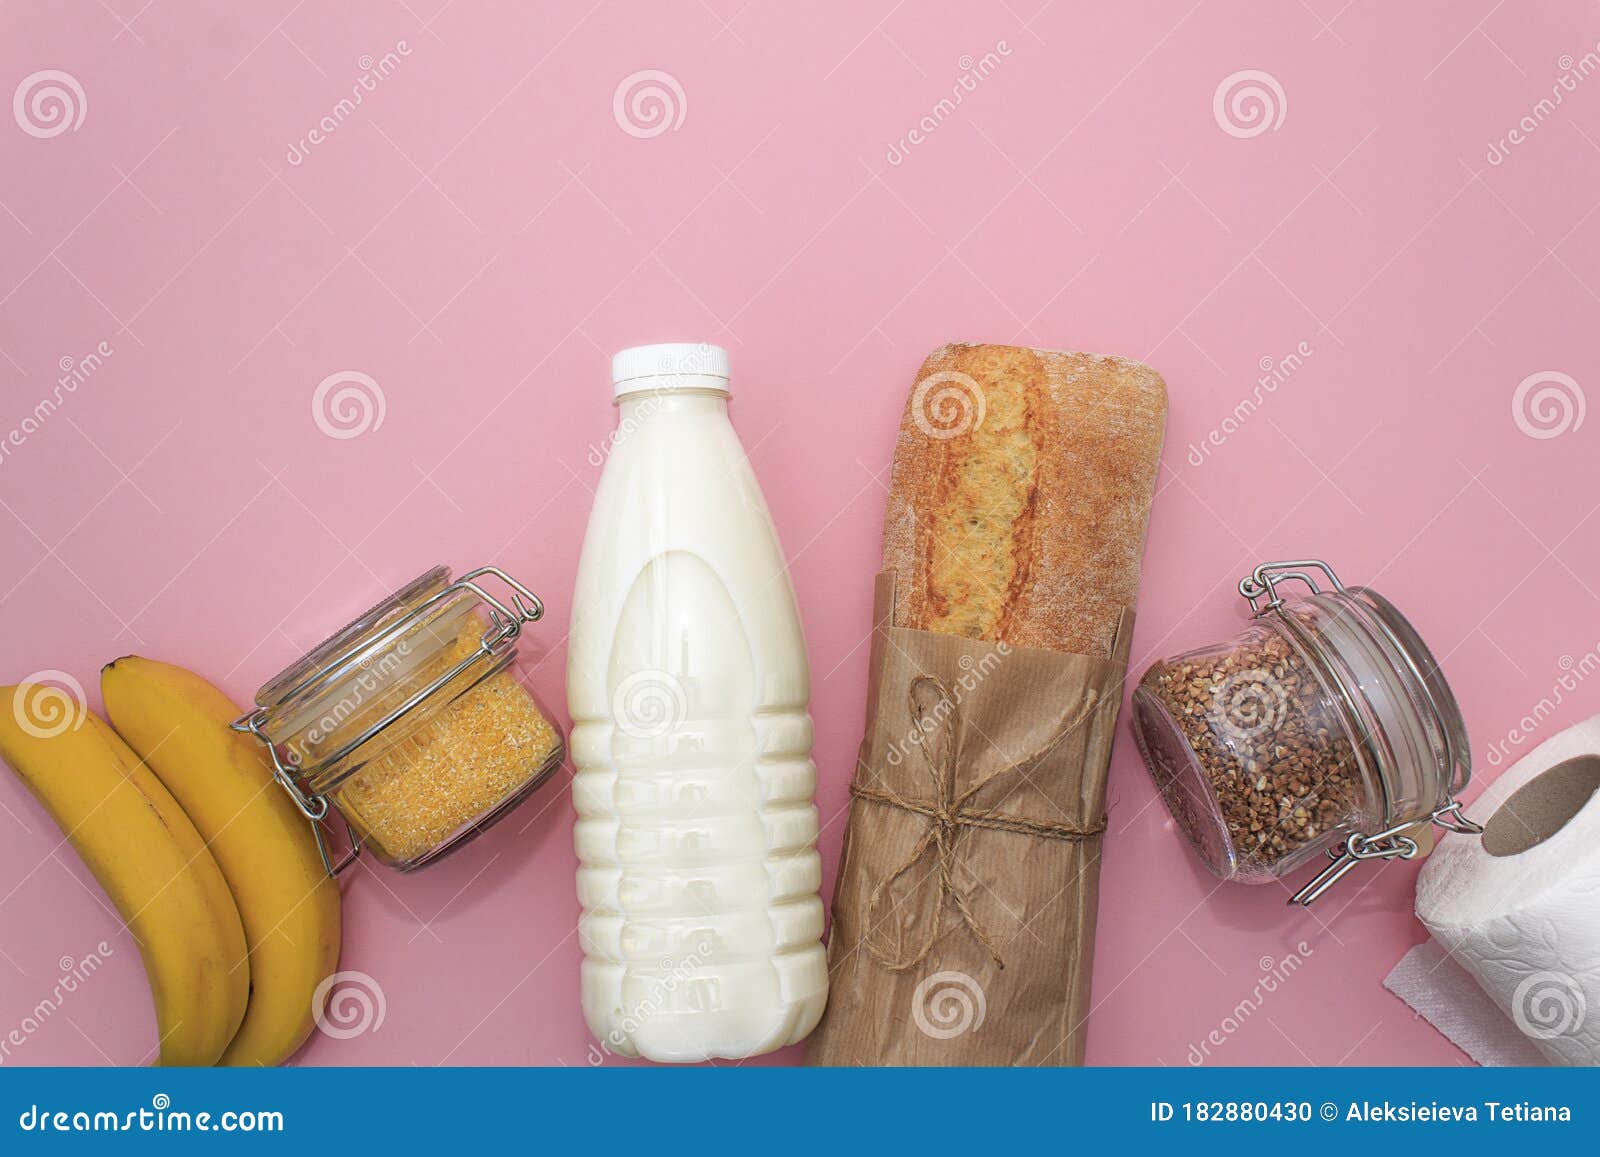 corn, buckwheat, bananas, milk, bread in white bag on blue background